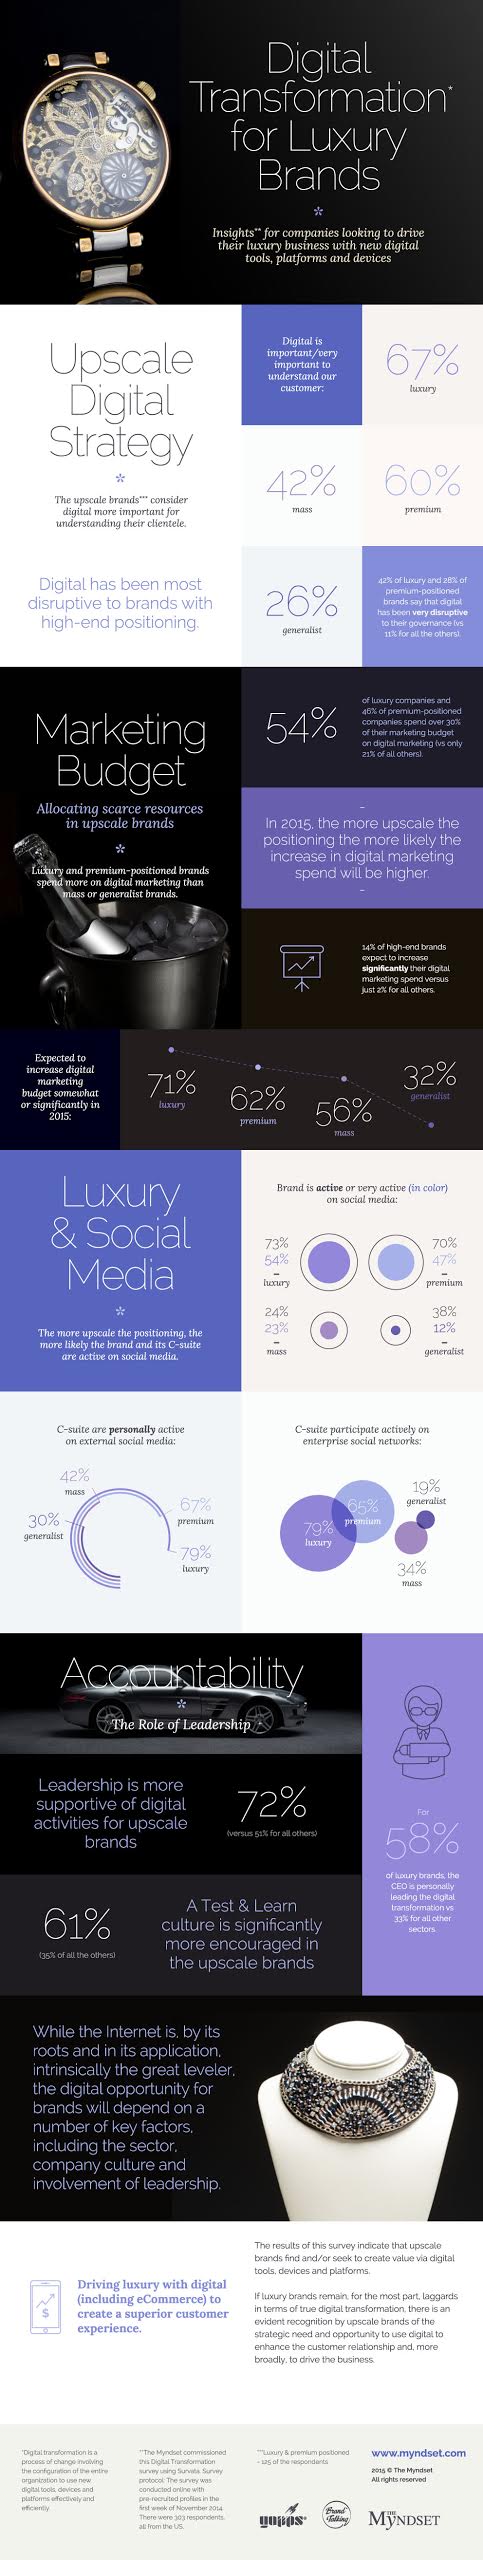 digital transformation for luxury brands v2